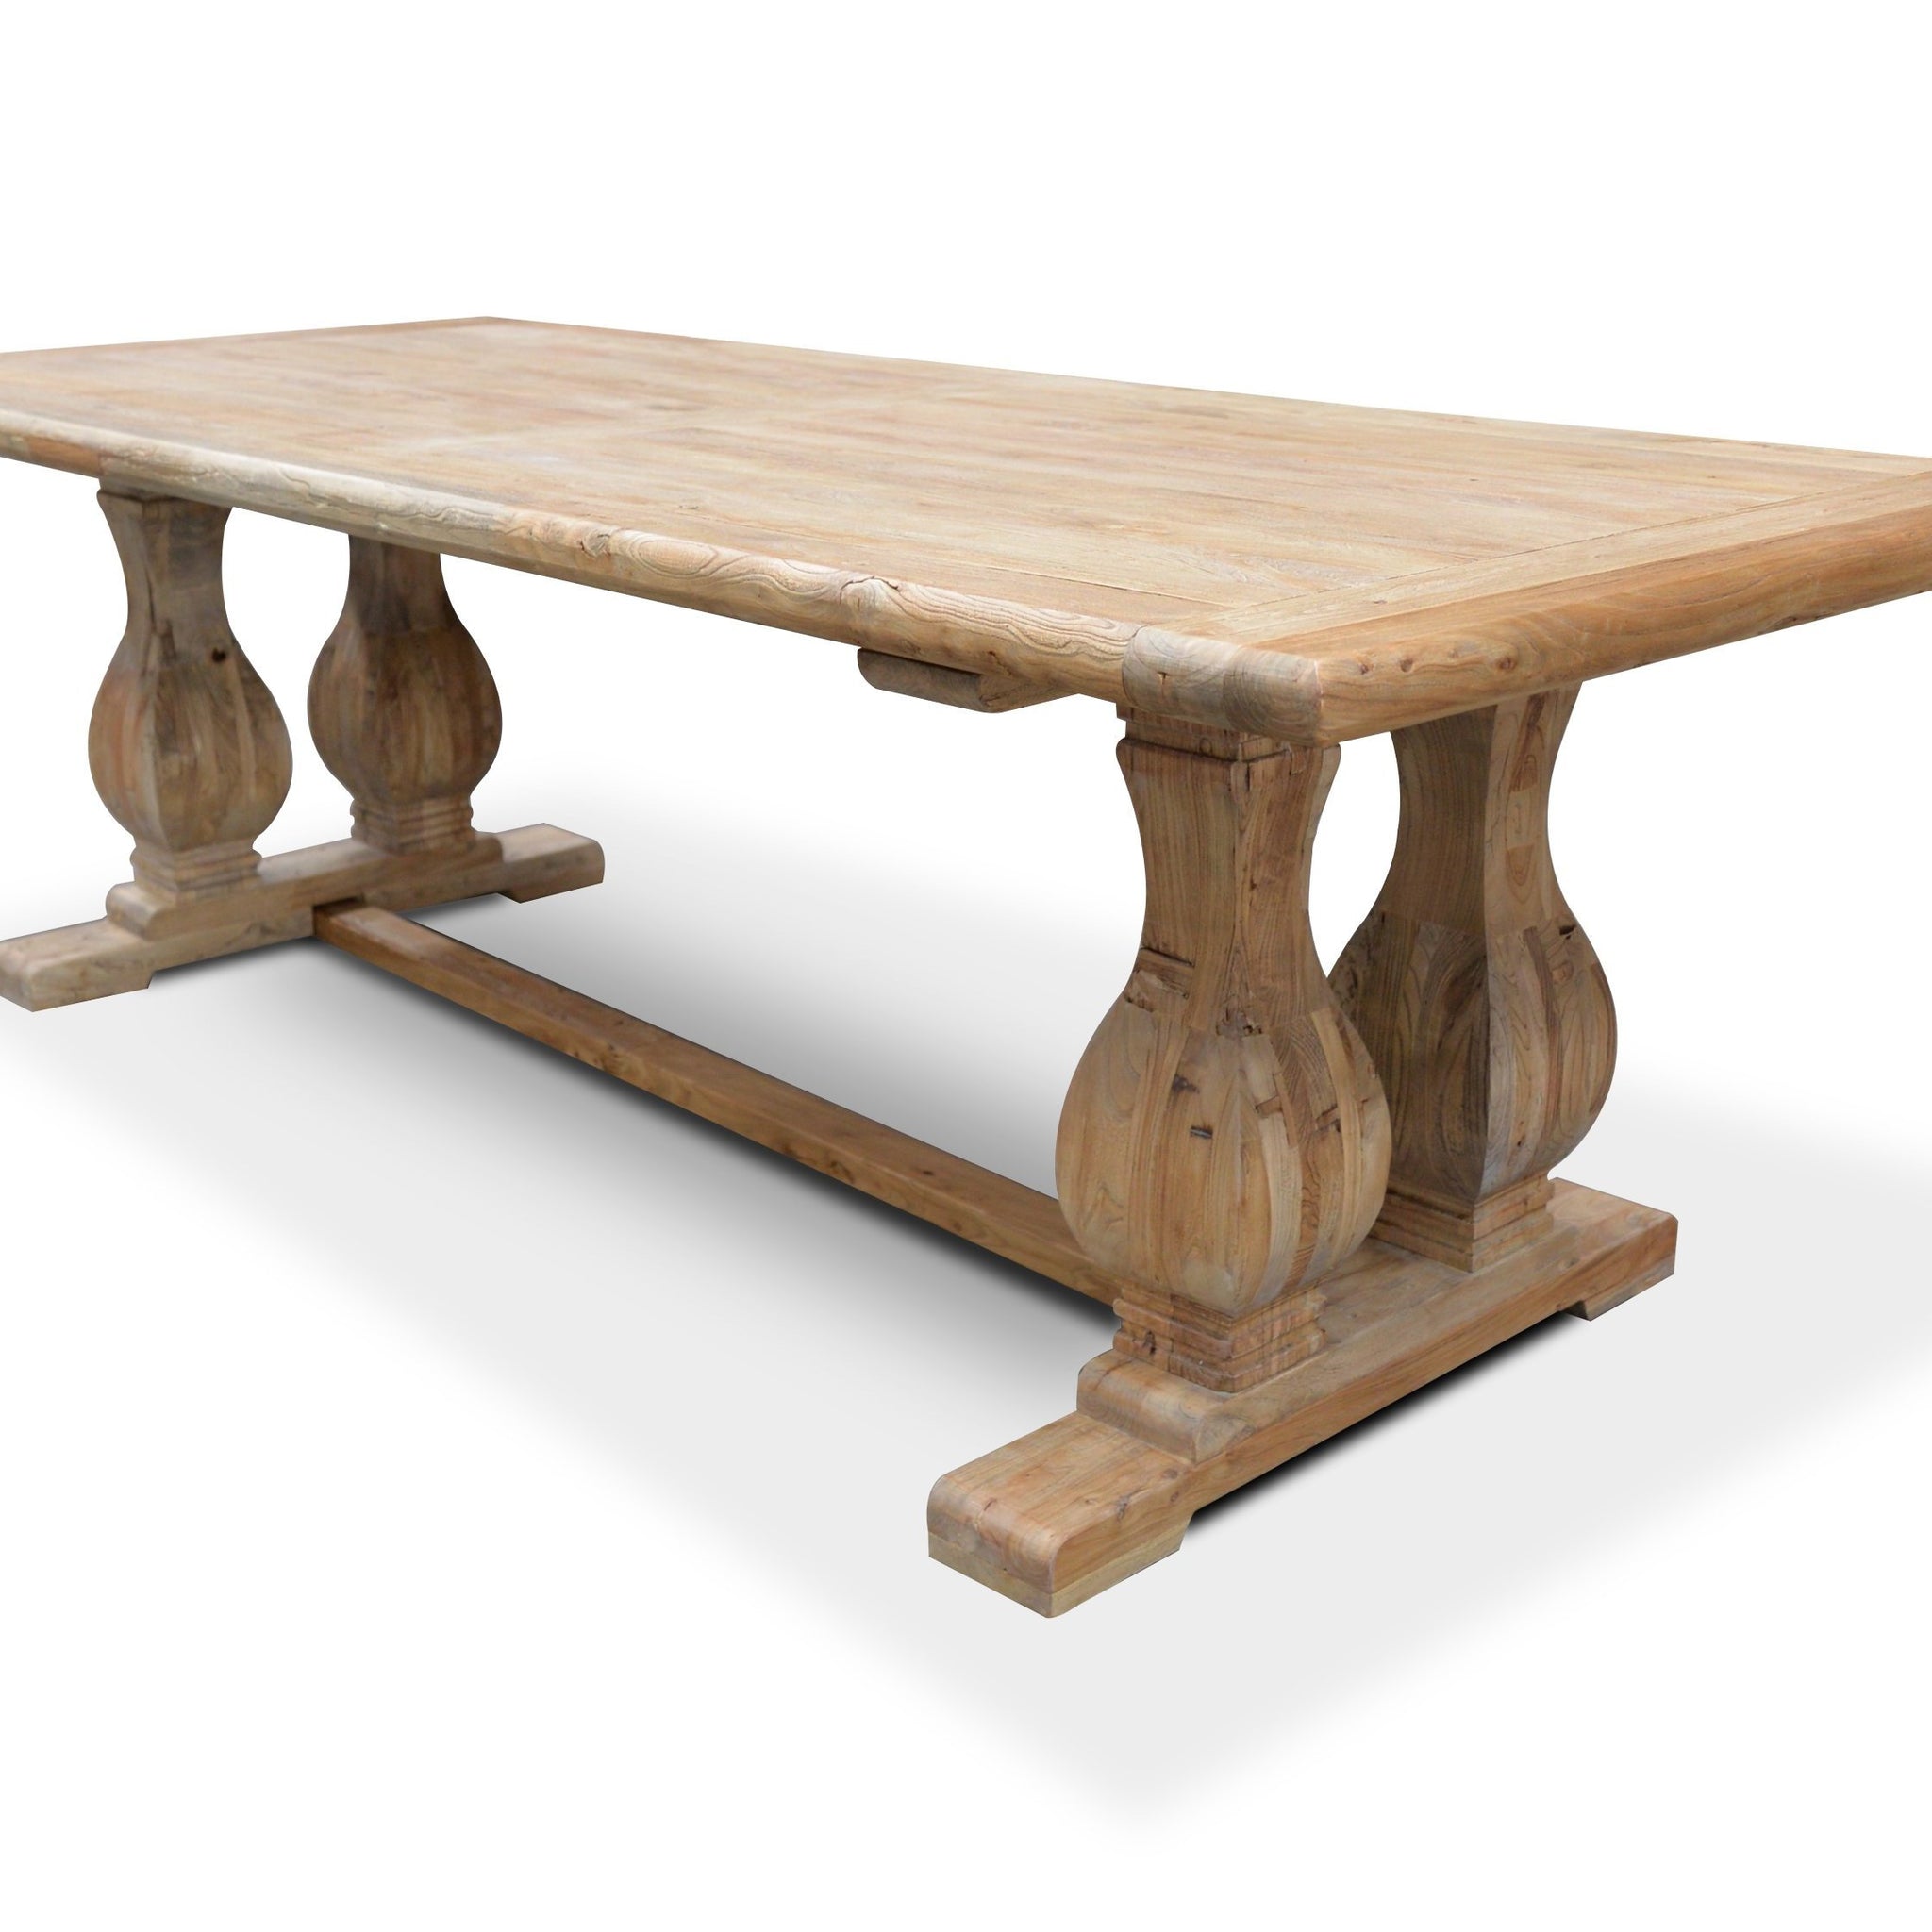 Genesis Elm Wood Dining Table 3m - Rustic Natural